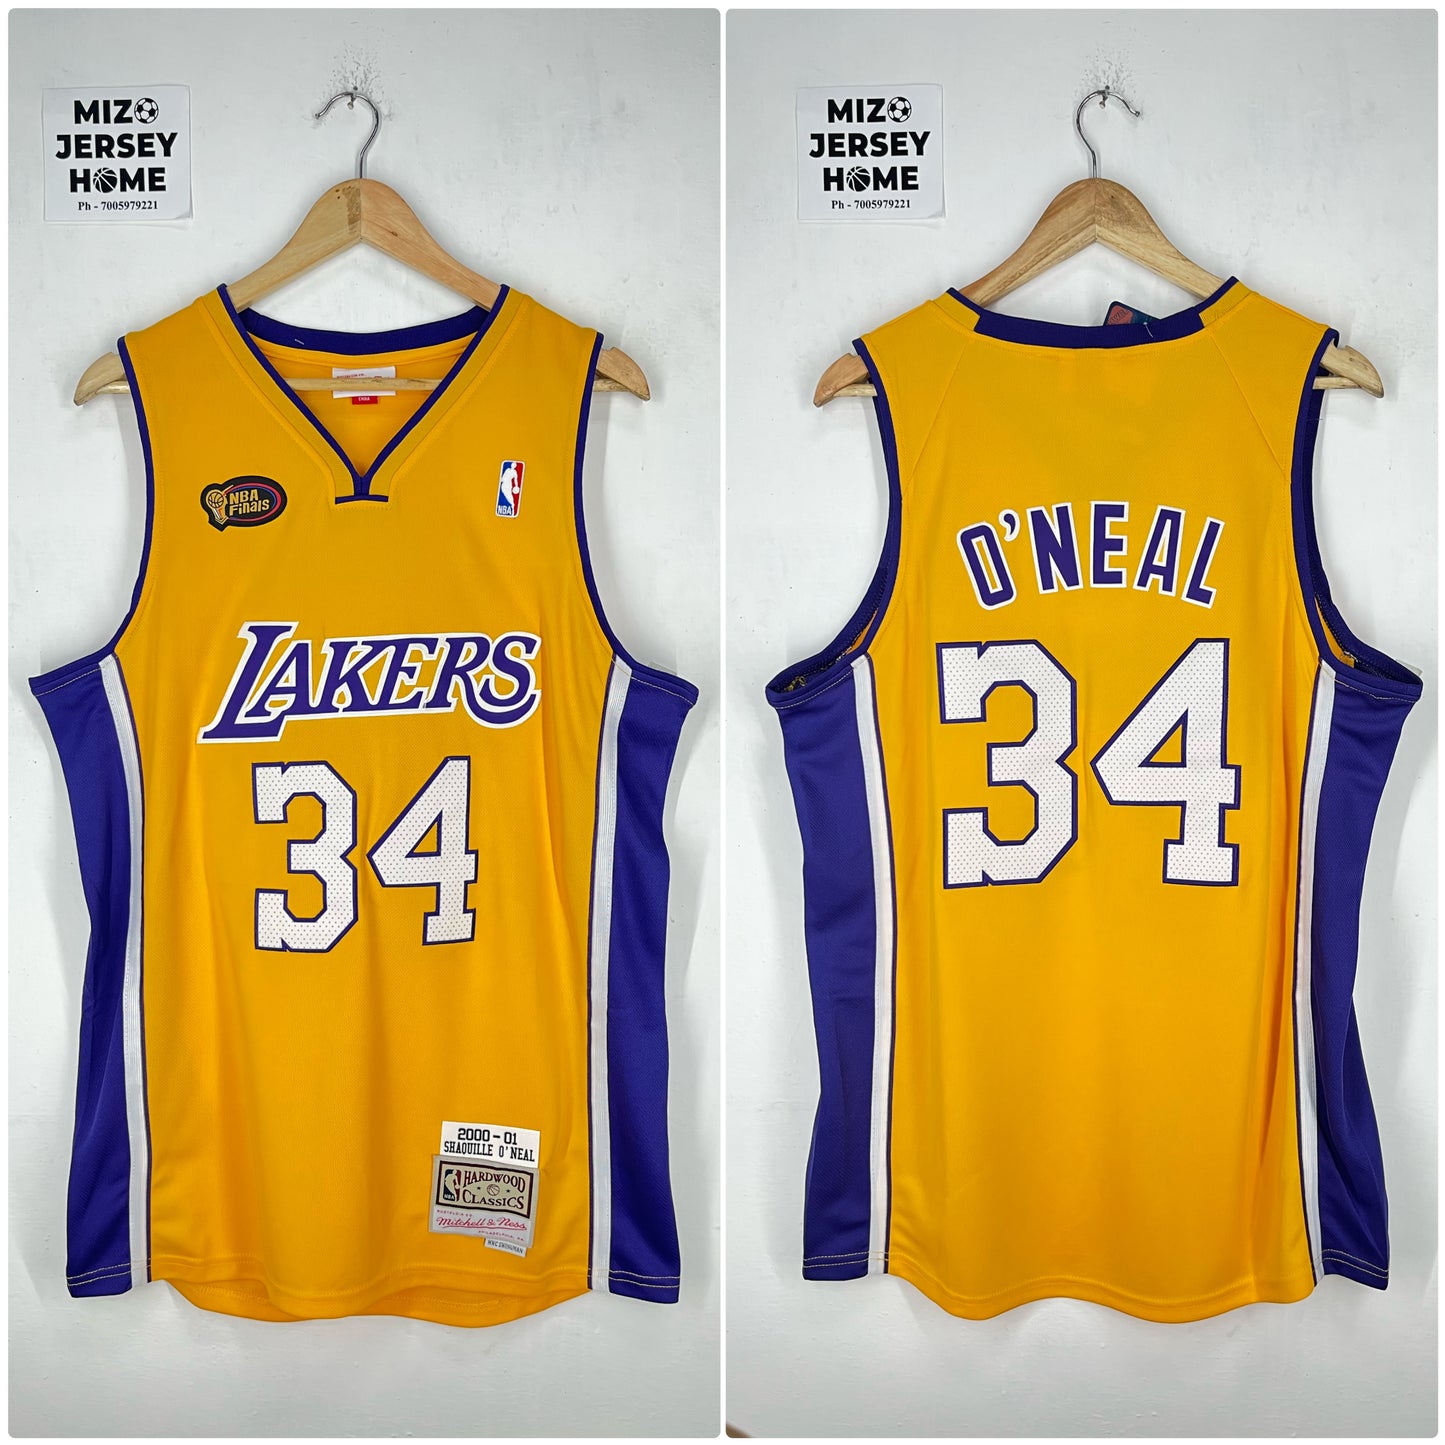 O'NEAL 34 Yellow Los Angeles Lakers NBA Jersey